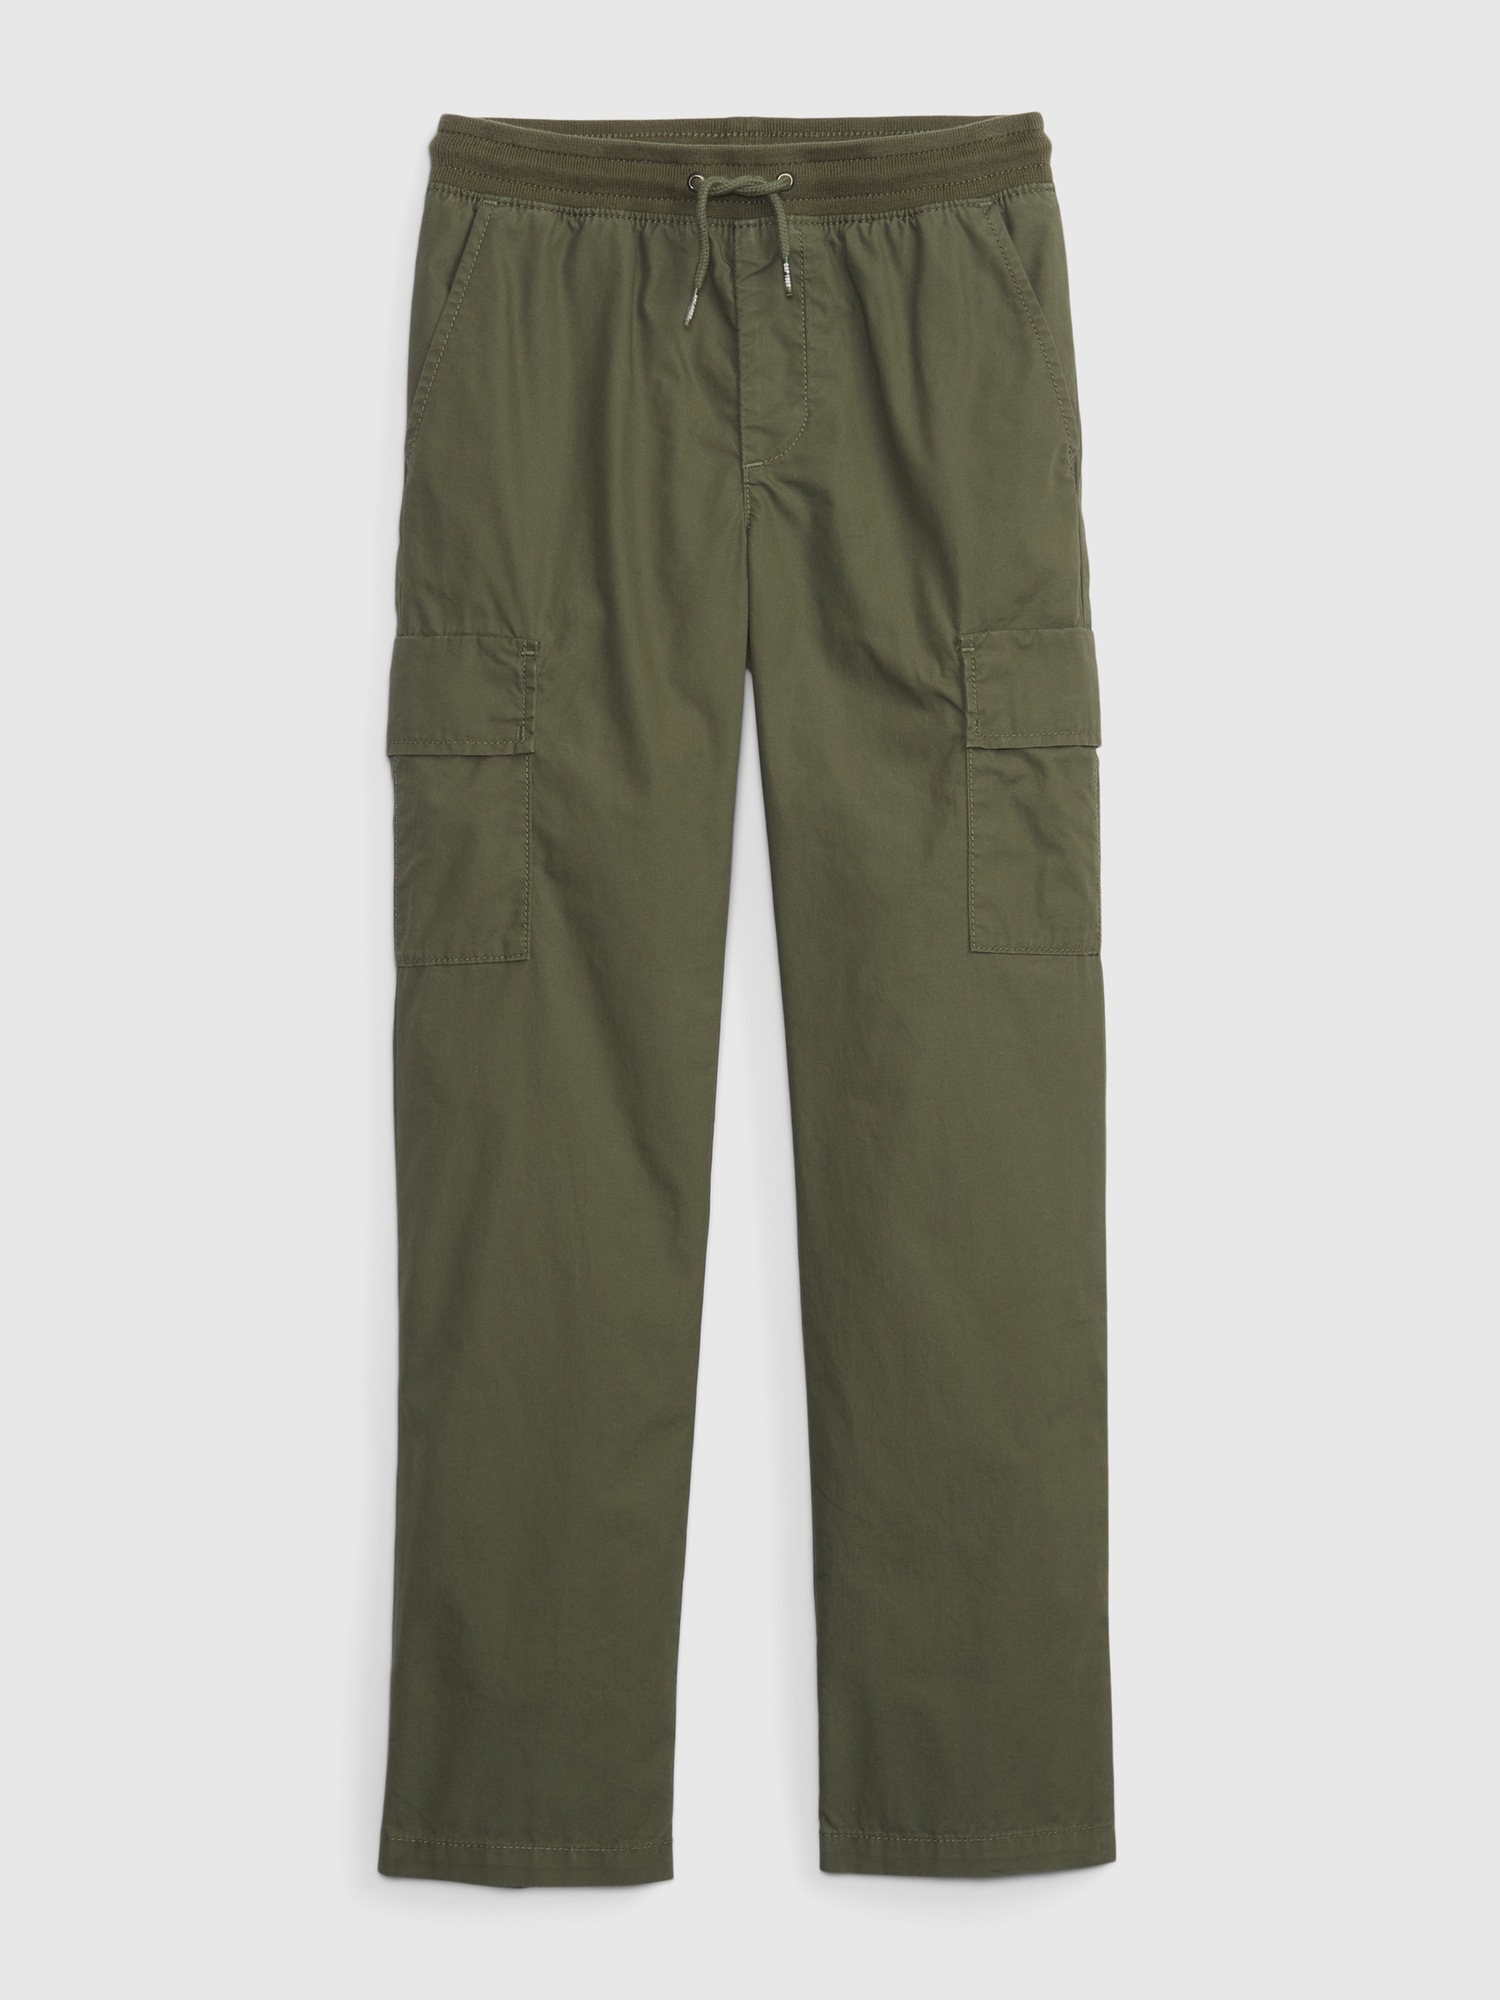 Petite Green Camo Buckle Front Cargo Pants